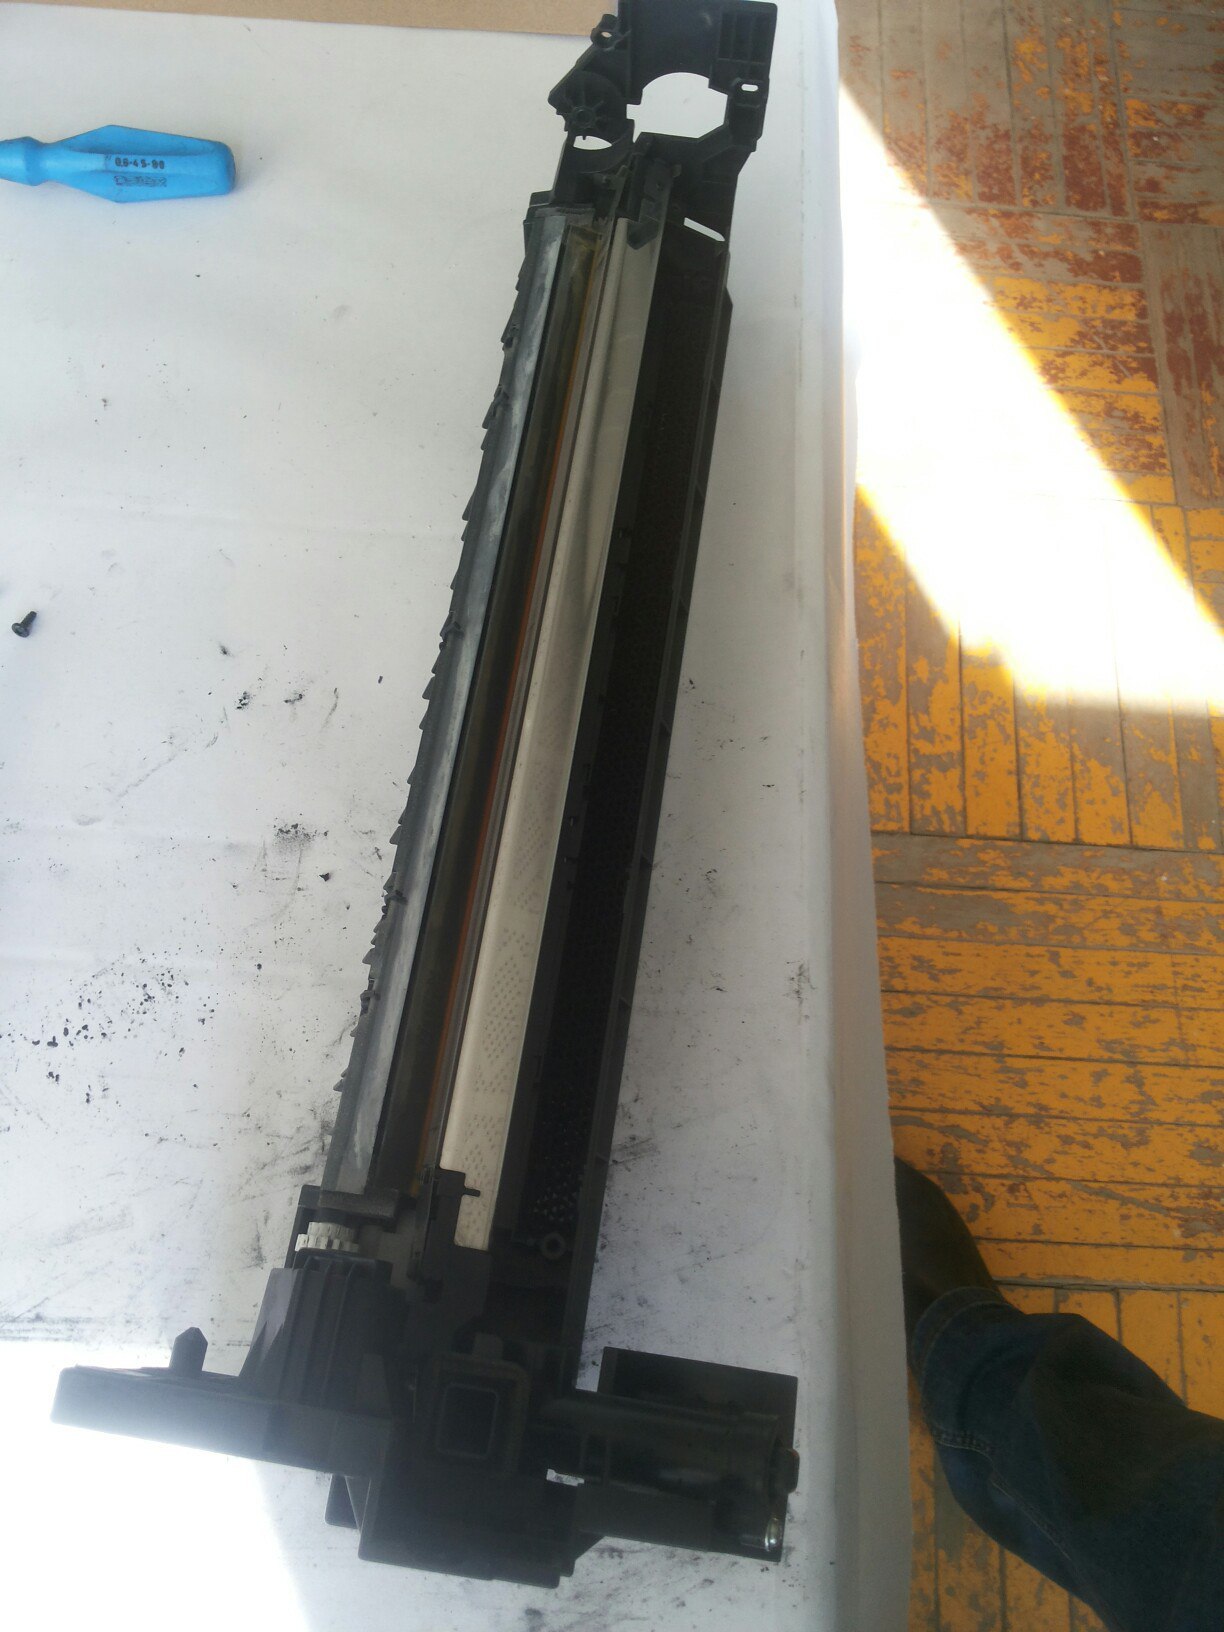 Konica minolta 215 dirty print - My, Repair of equipment, Konica Minolta, Longpost, My